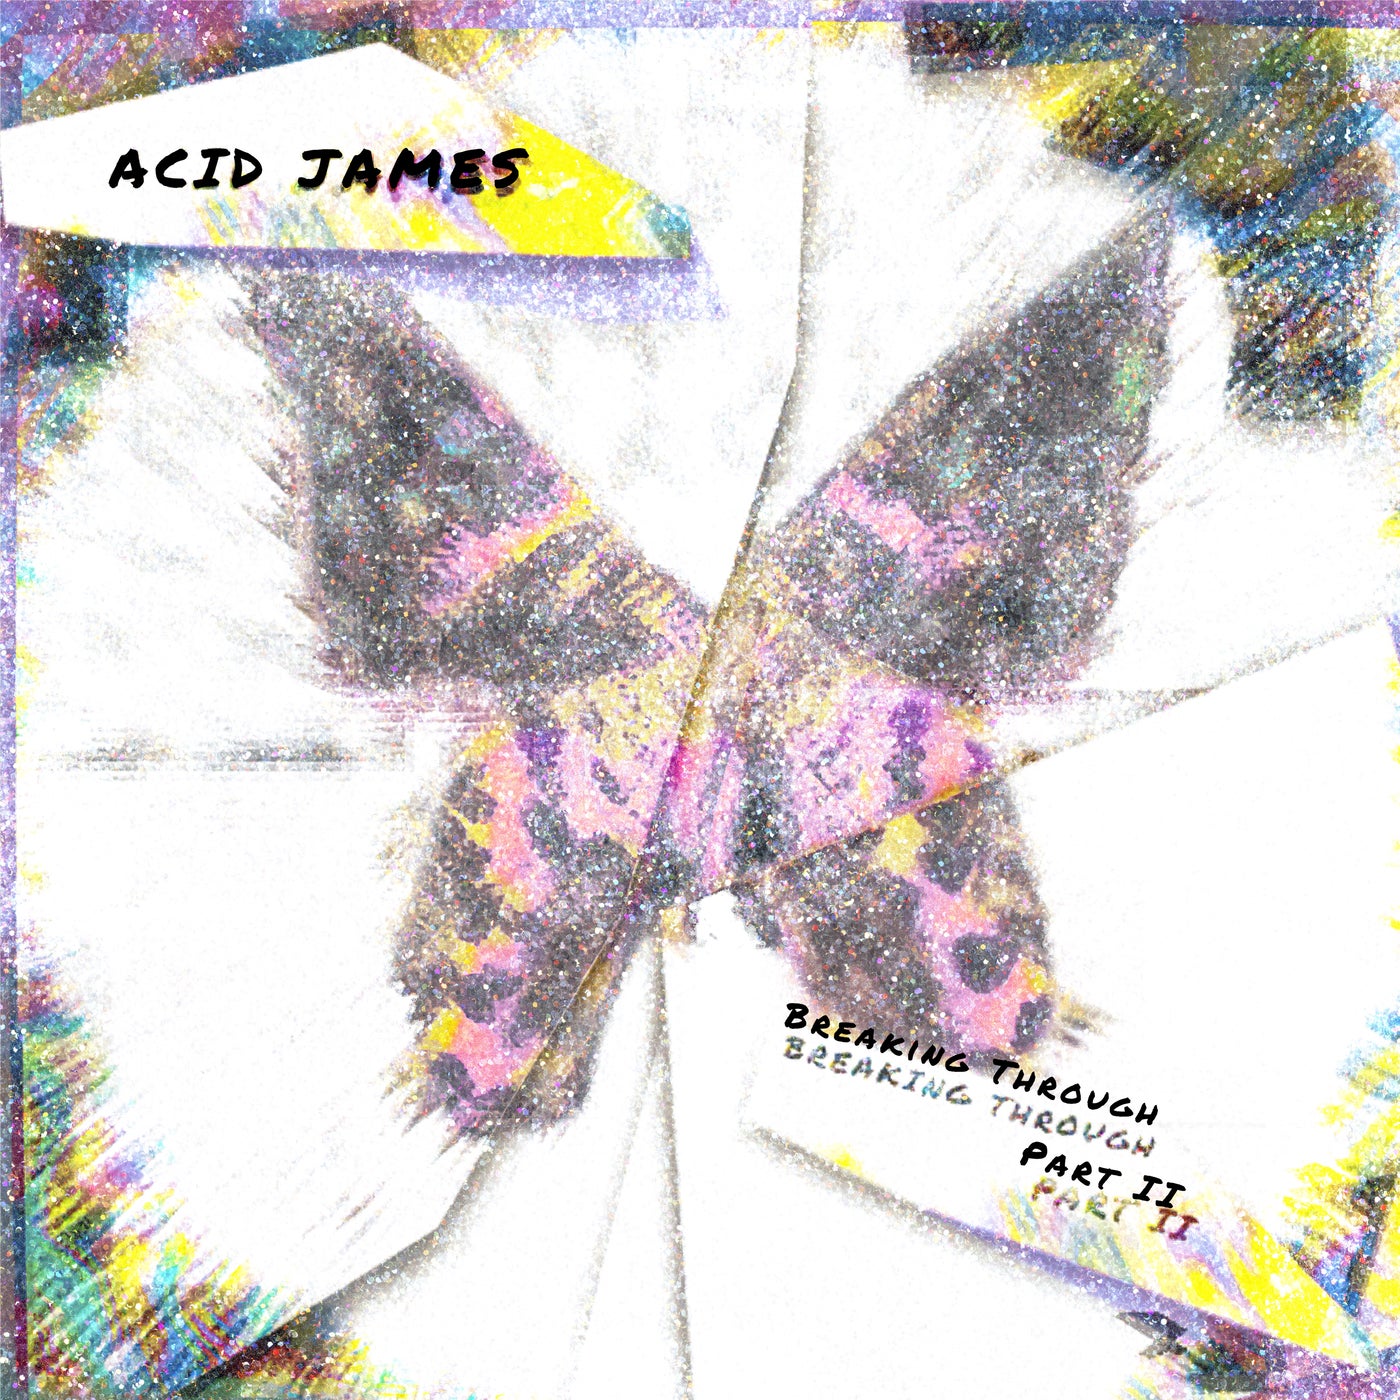 Acid James, Will McCartney – Breaking Through Part II [ACIDJ0009]